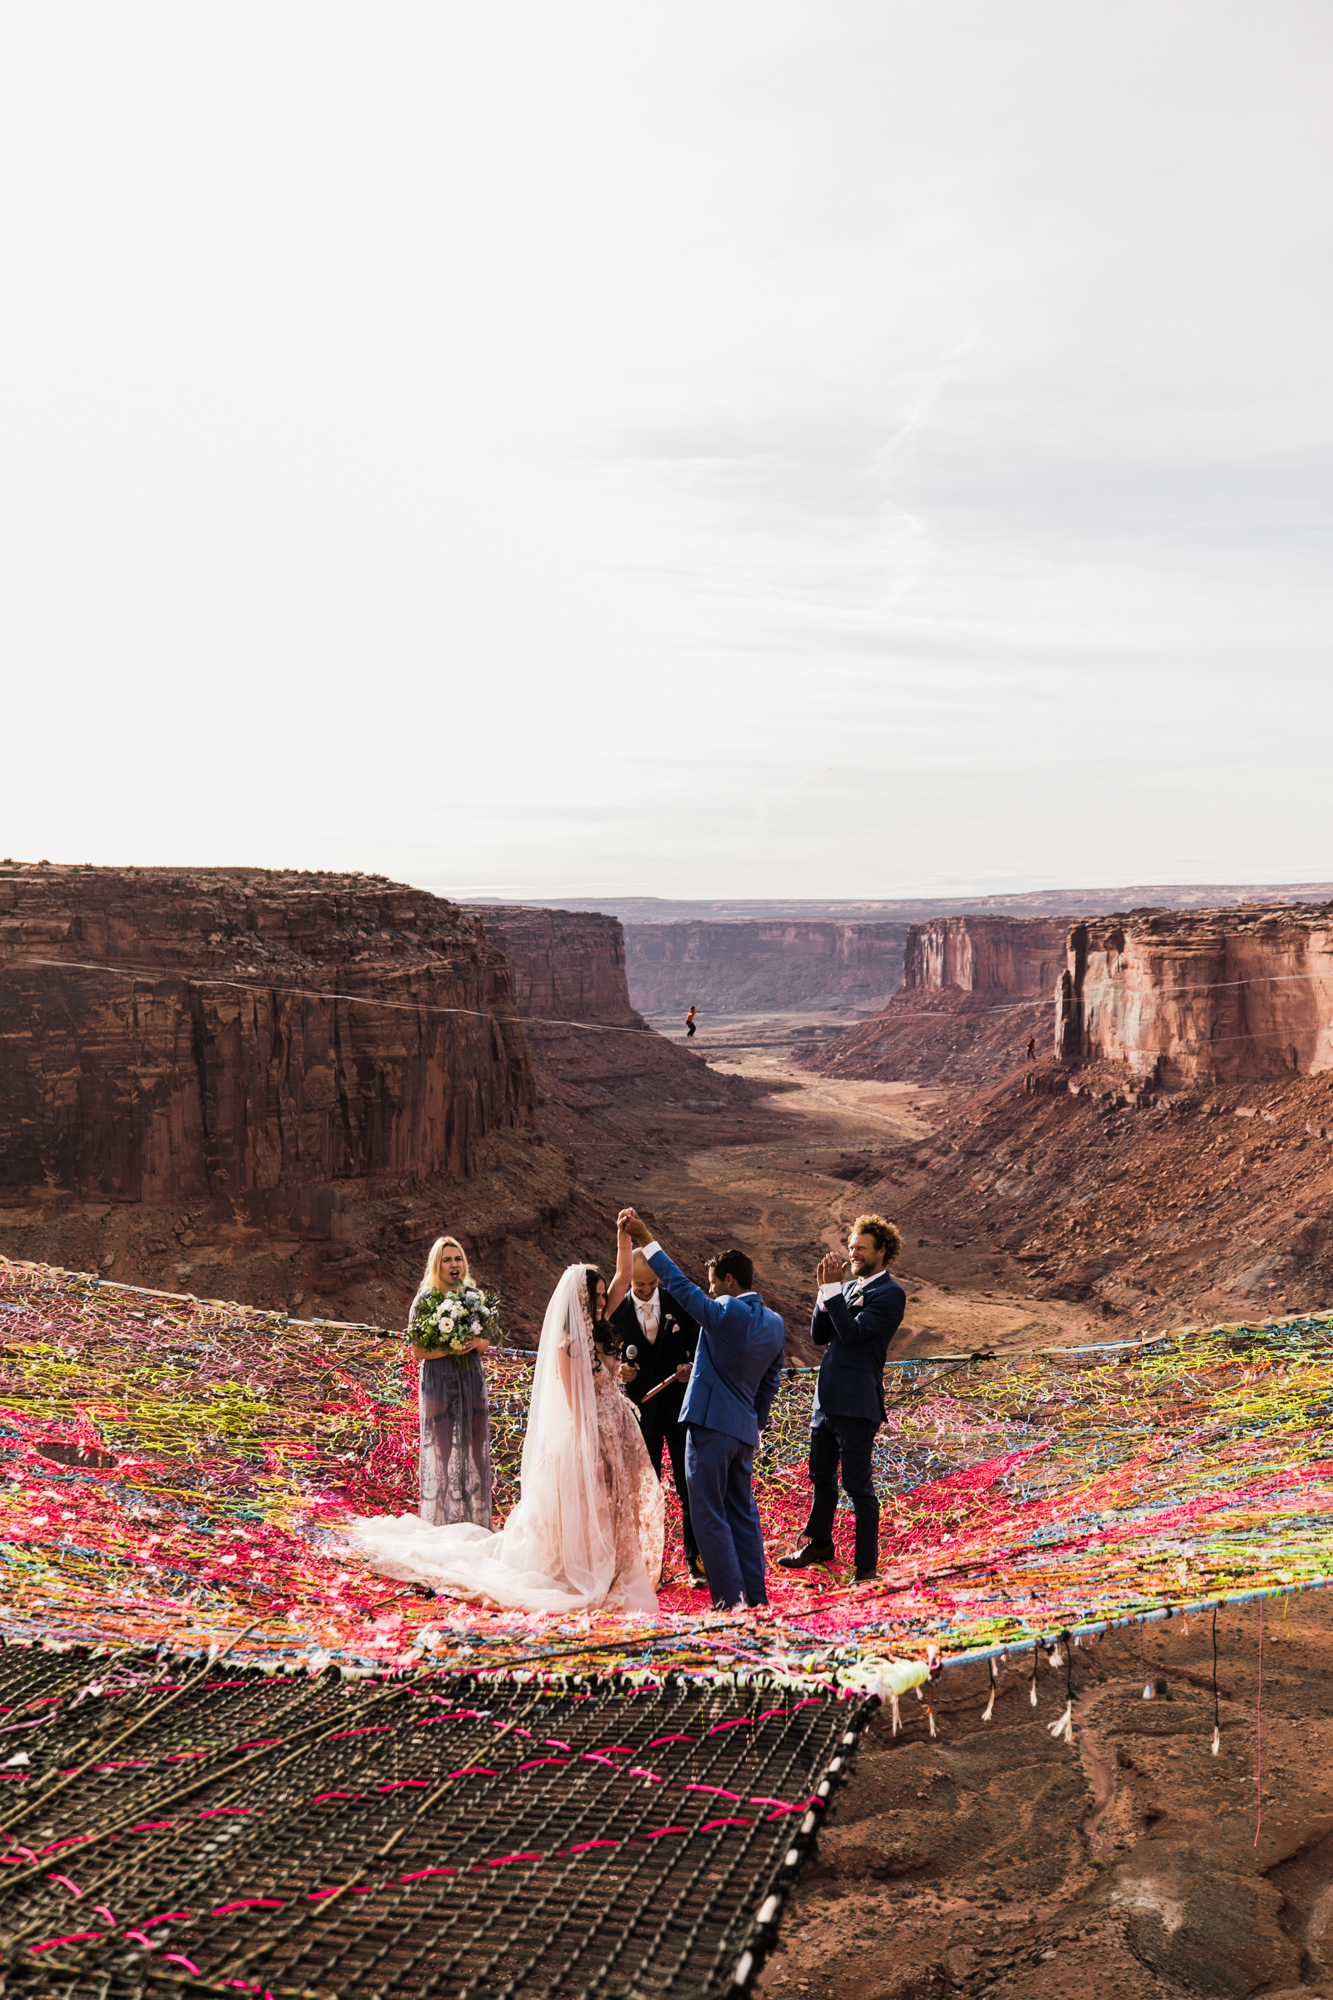 spacenet wedding 400 feet above a canyon in moab, utah | adventurous desert elopement | galia lahav bride | the hearnes adventure wedding photography | www.thehearnes.com